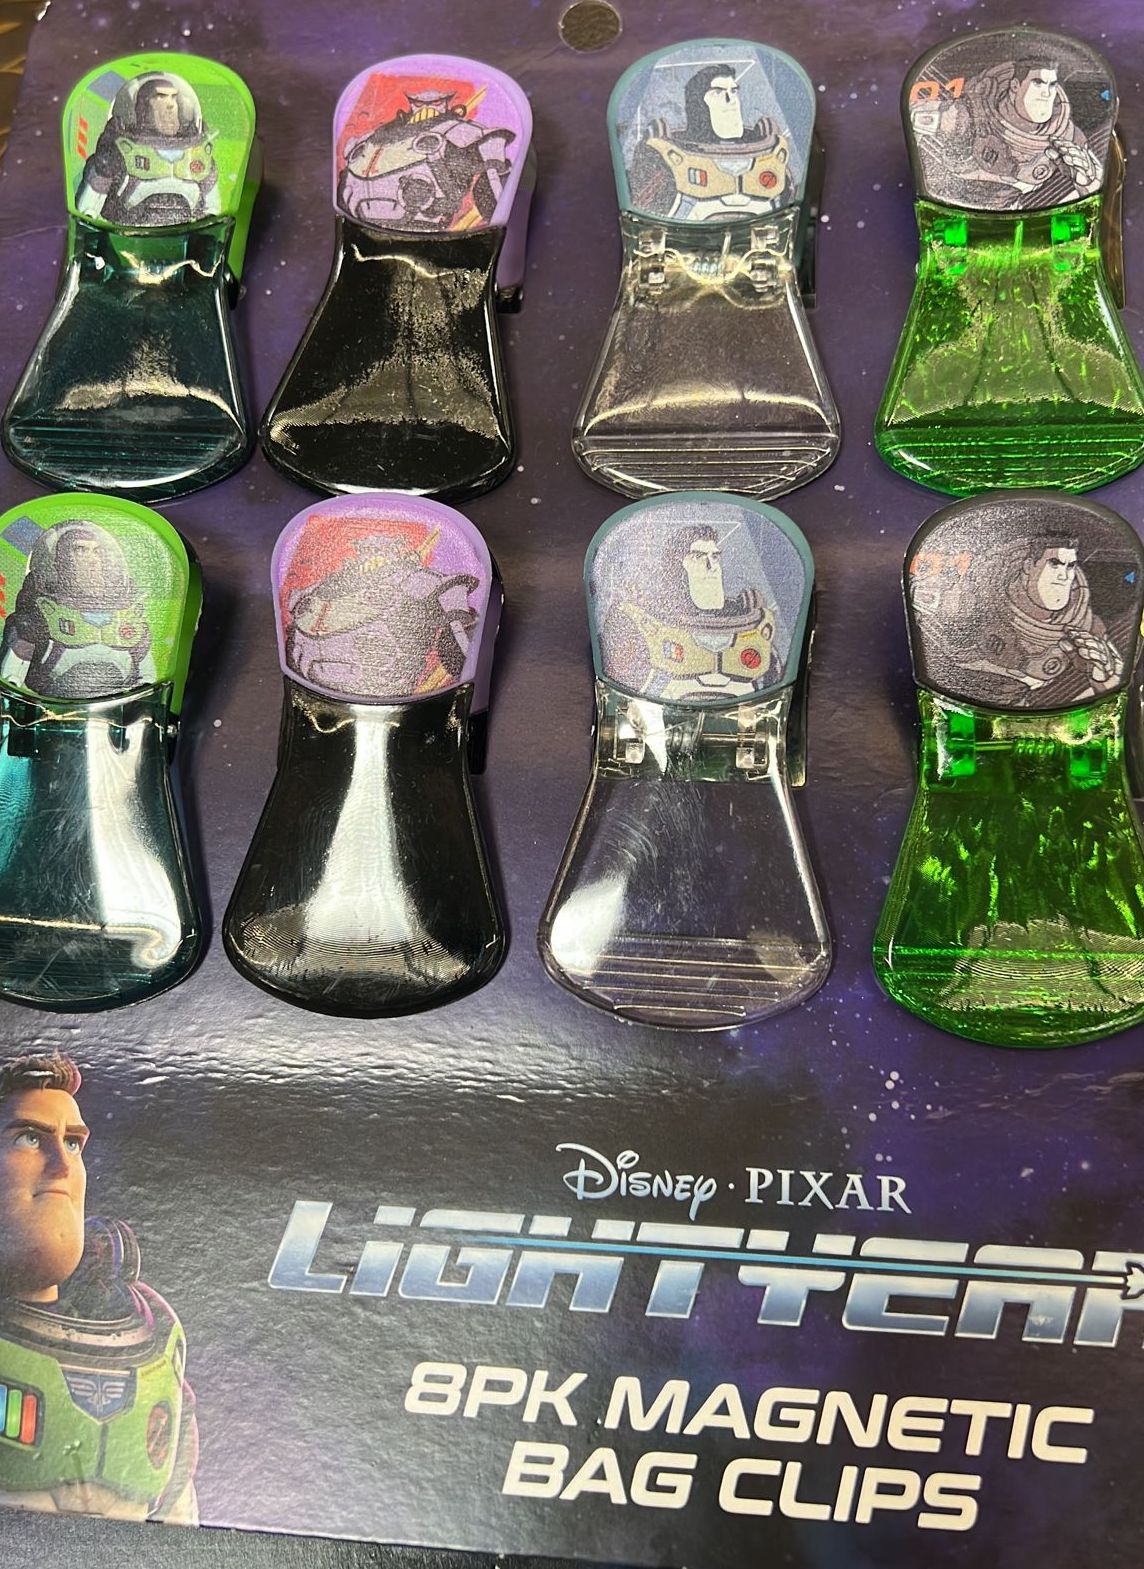 Disney Pixar Buzz Lightyear Kitchen Magnetic Bag Clips Set of 8 New